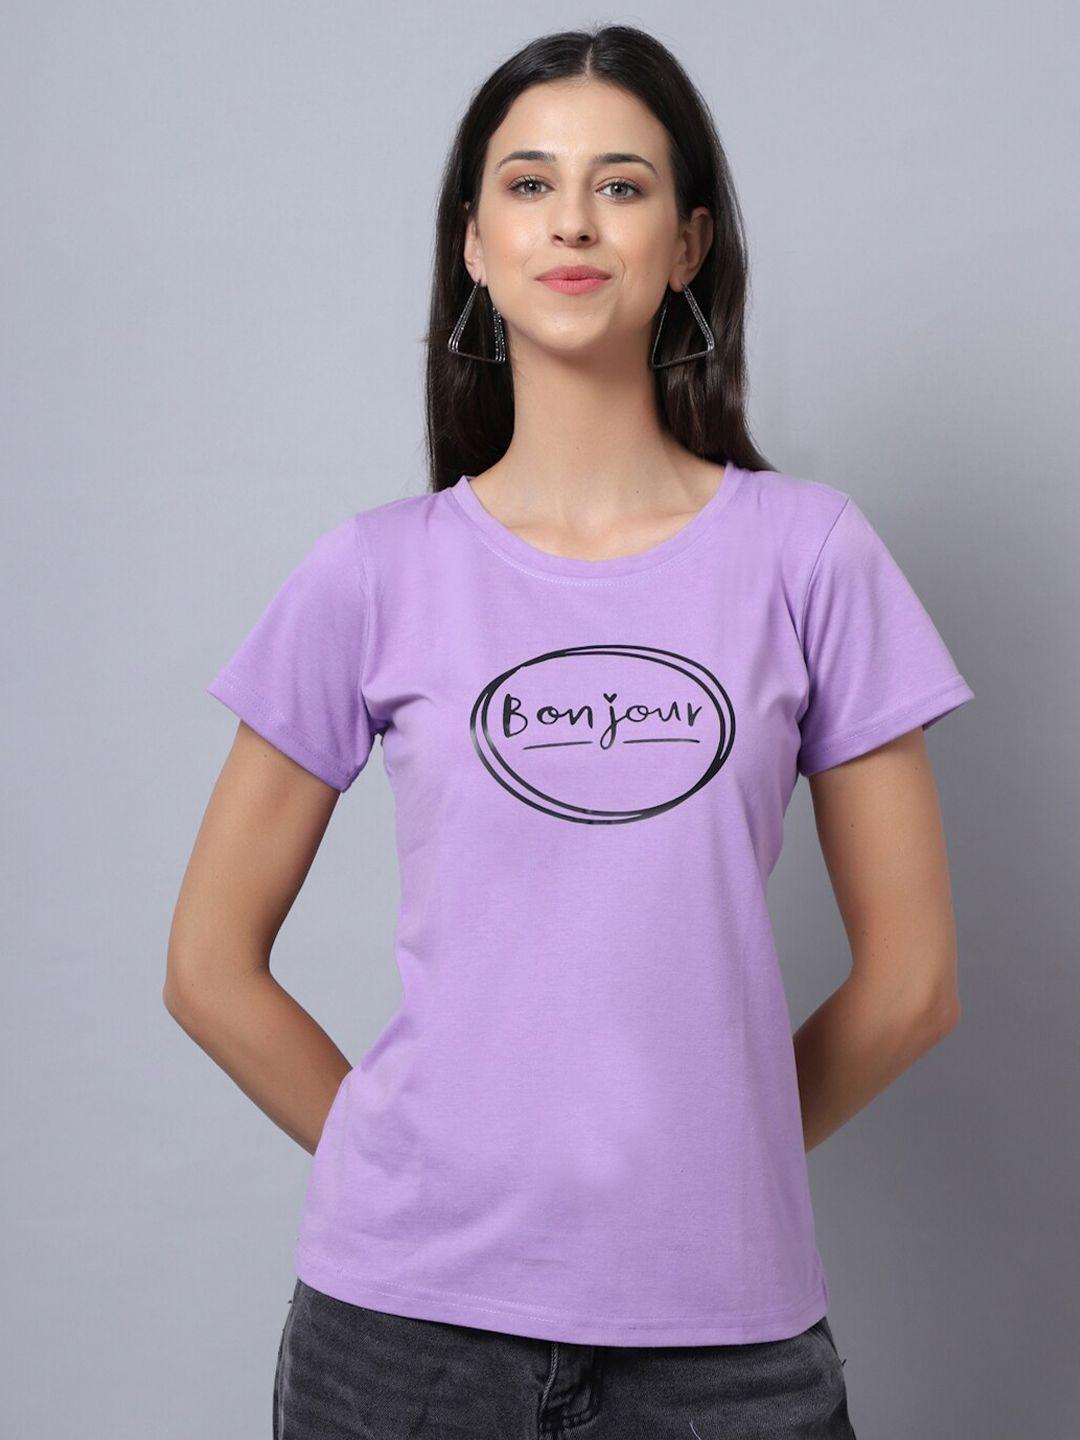 unaone women lavender typography printed plus size slim fit cotton t-shirt